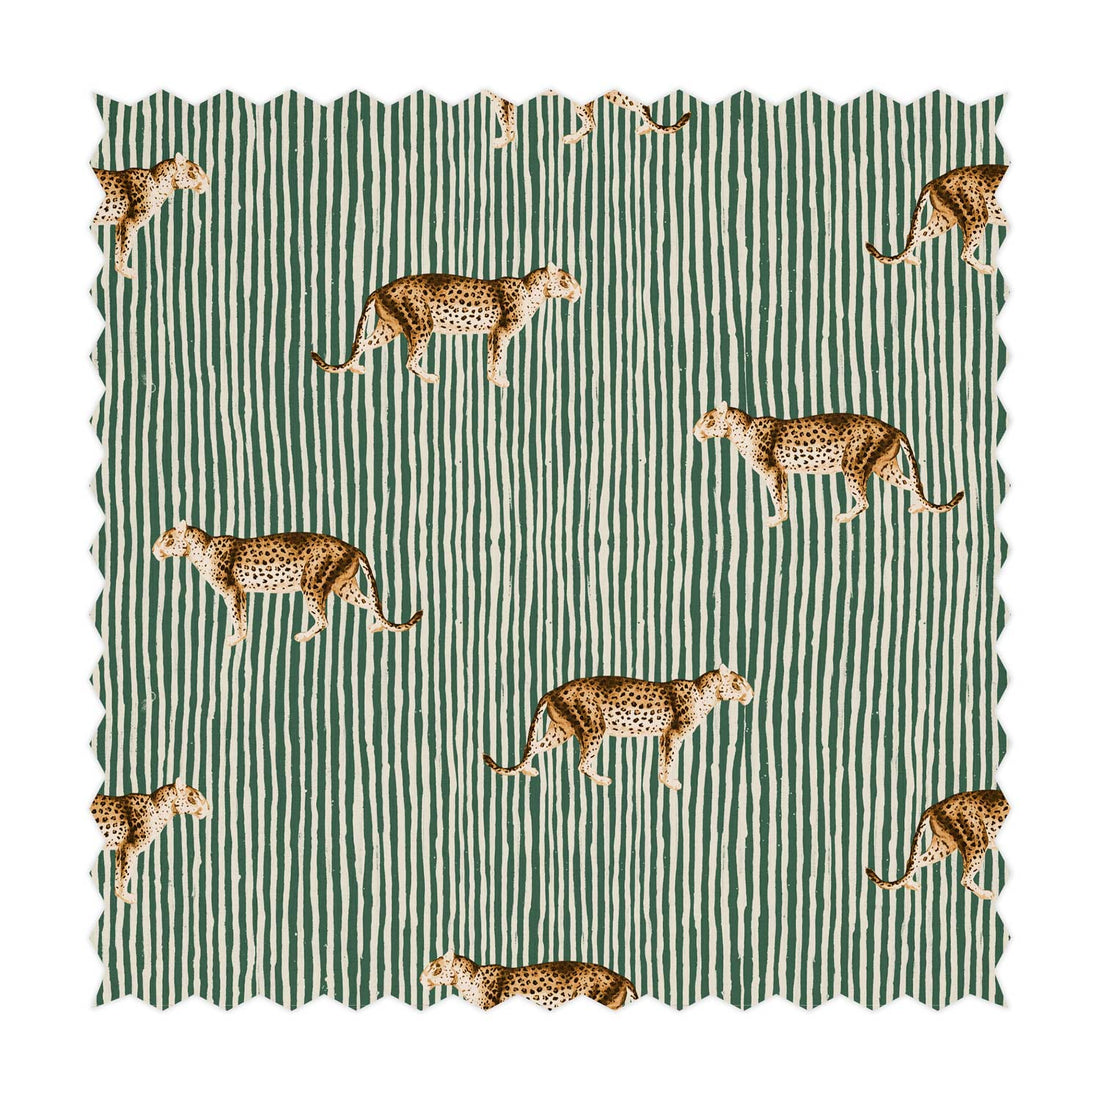 leopard green printed fabric design